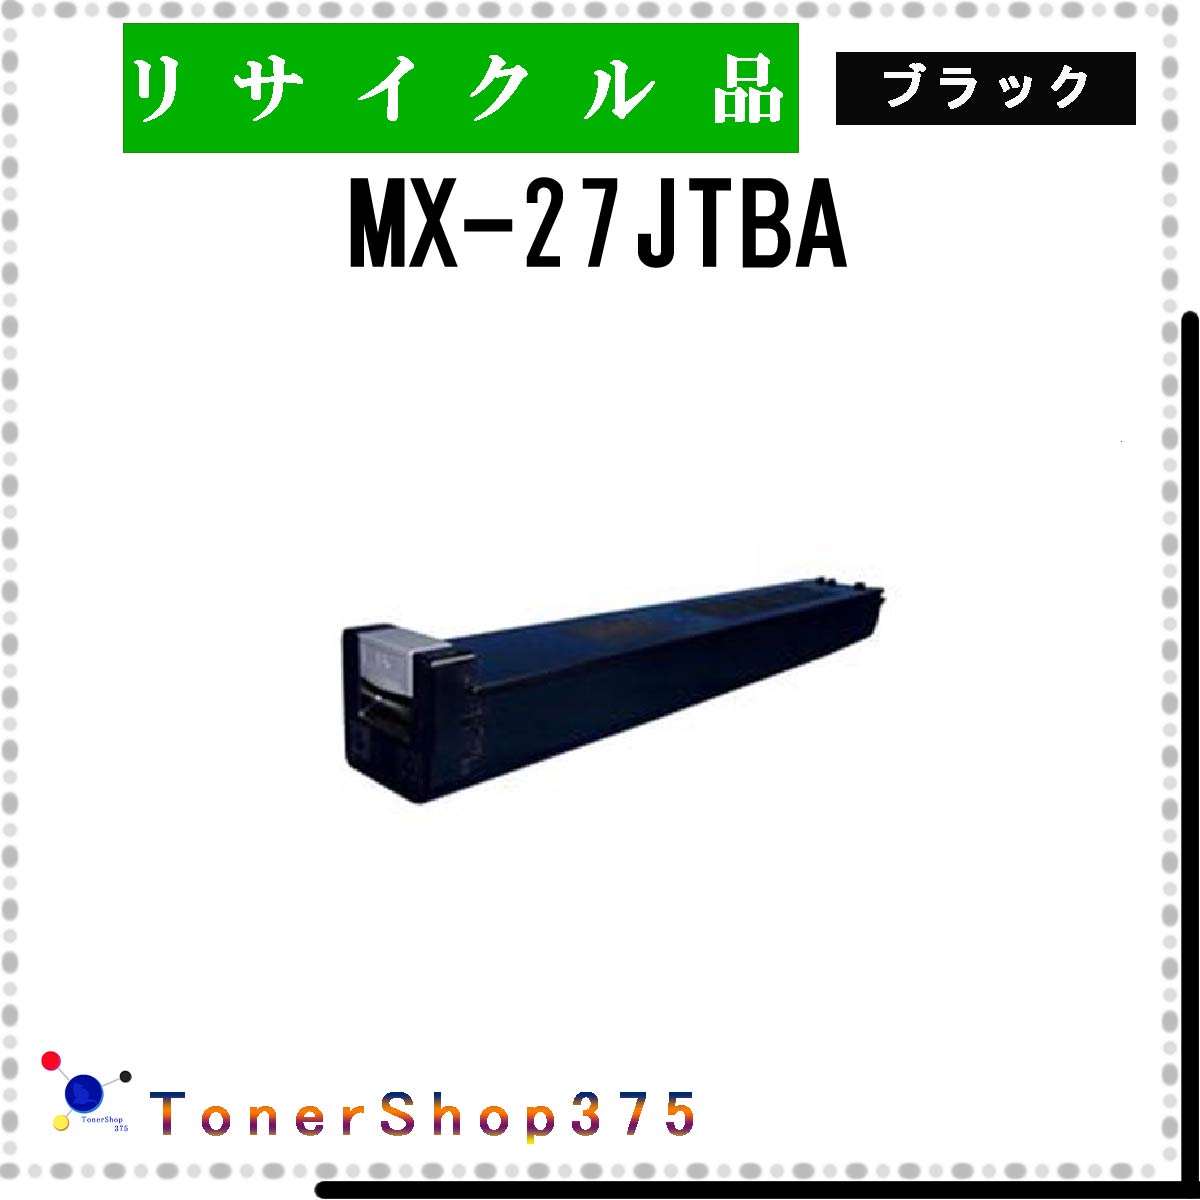 SHARP 【 MX-27JTBA 】 ブラック リサイクル トナー 国内有名リサイクル工場より直送 在庫品 シャープ